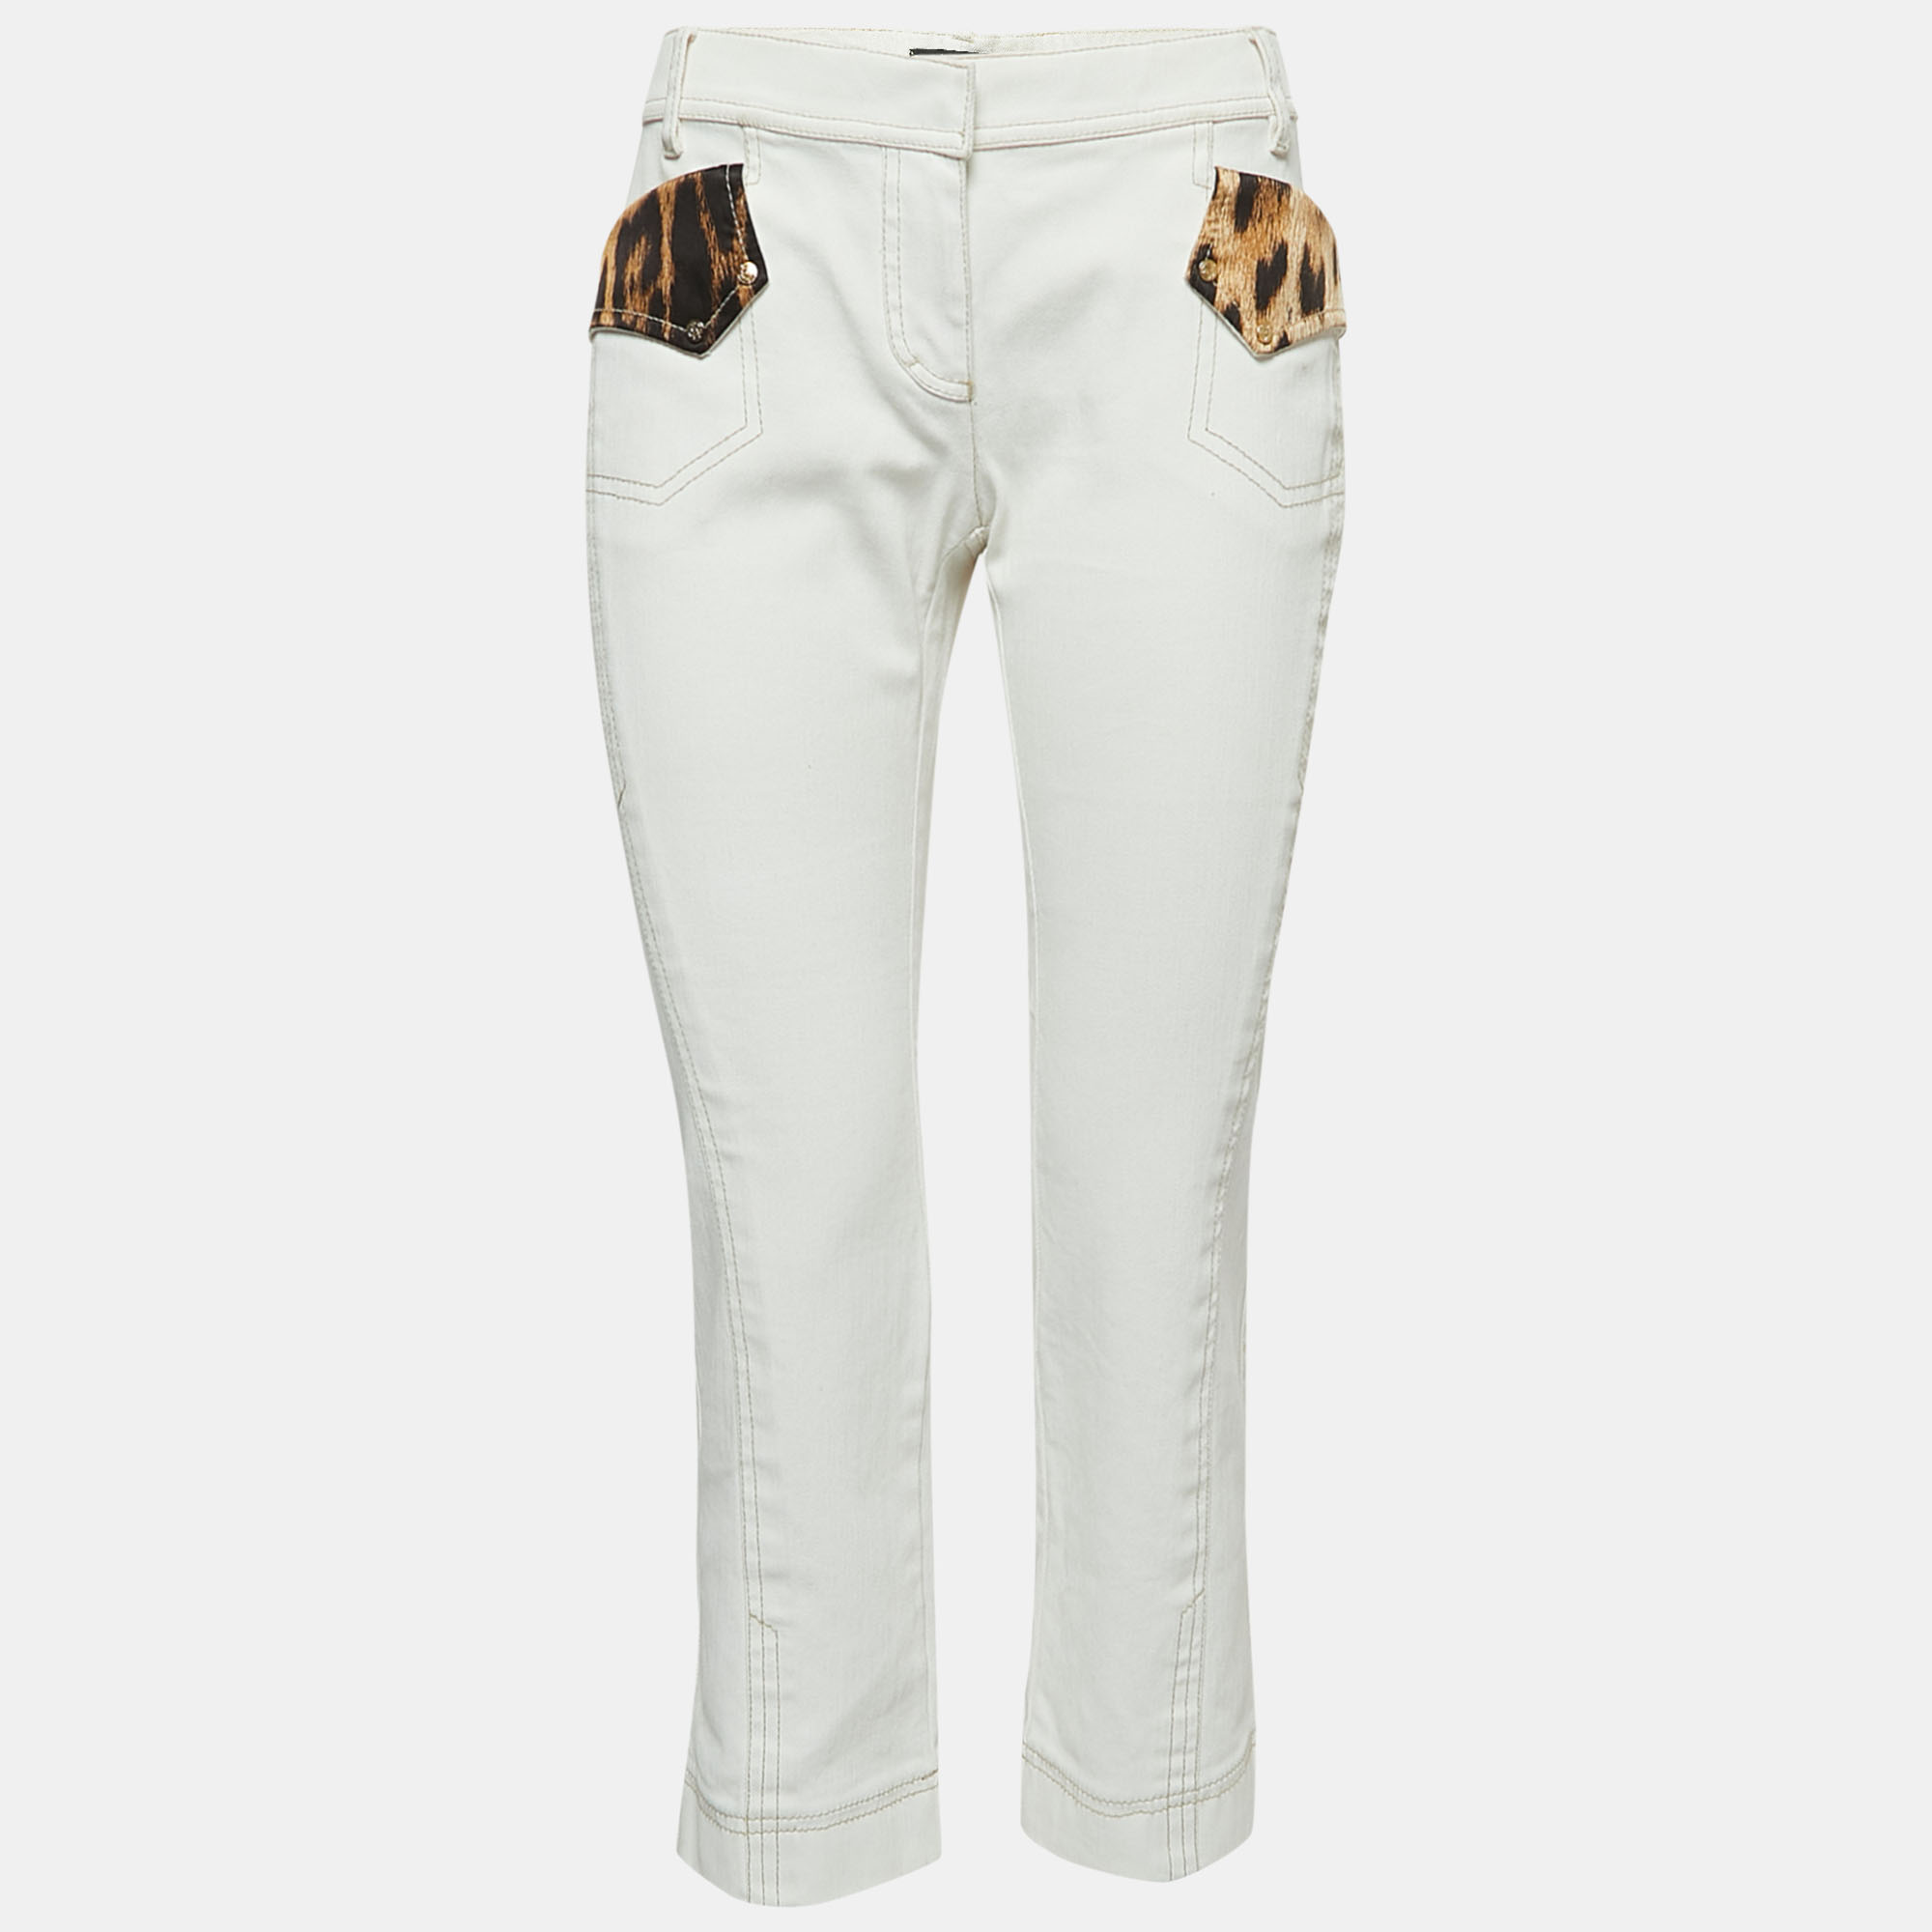 Pre-owned Roberto Cavalli White Denim Silk Animal Print Silk Trimmed Cropped Jeans L Waist 32"